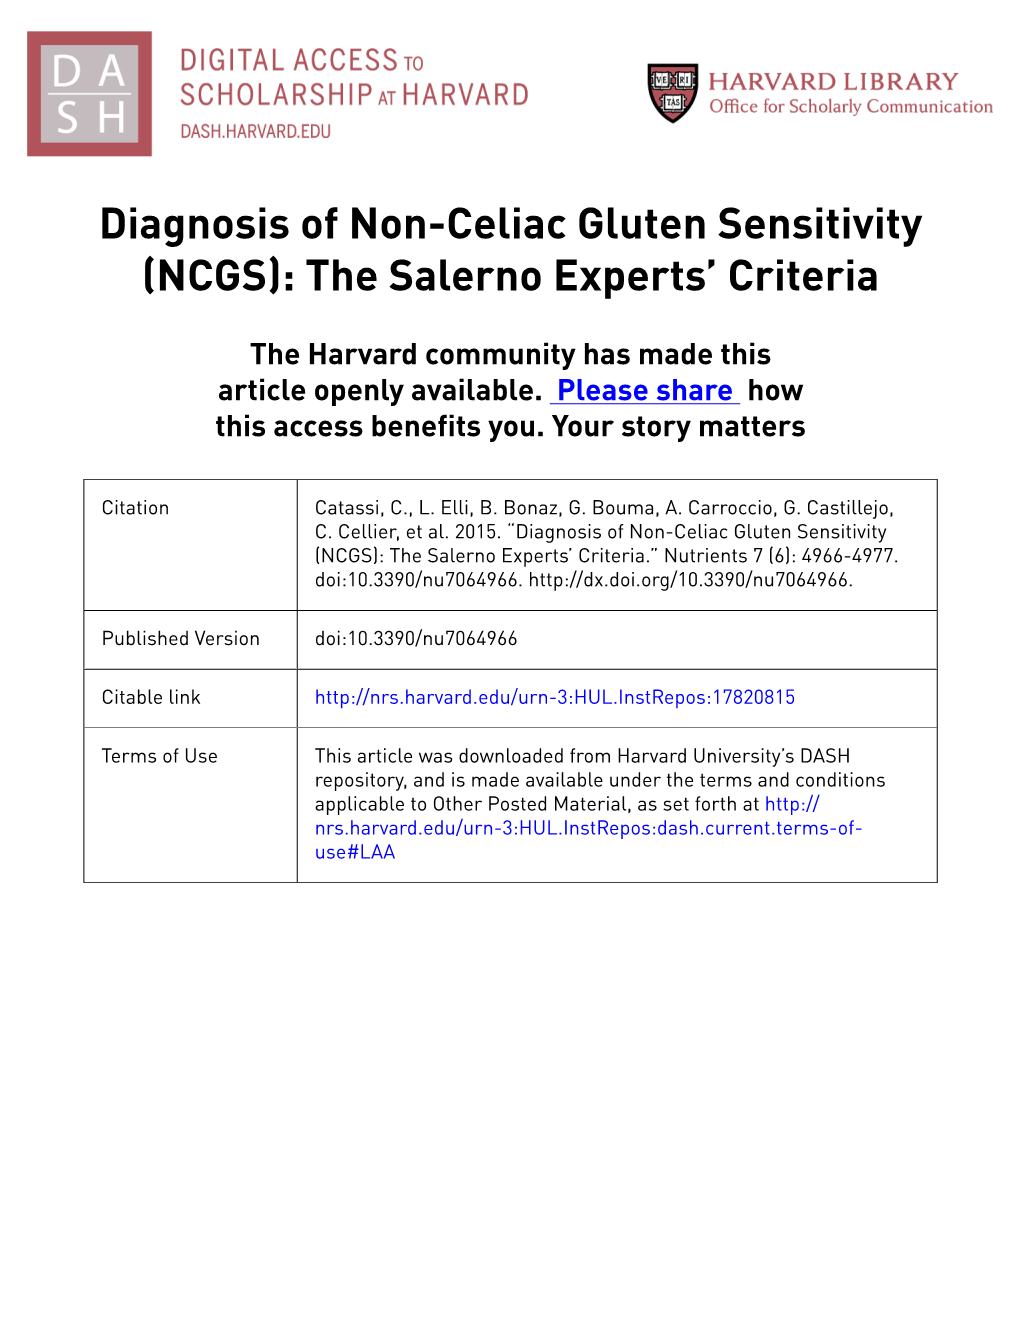 Diagnosis of Non-Celiac Gluten Sensitivity (NCGS): the Salerno Experts’ Criteria